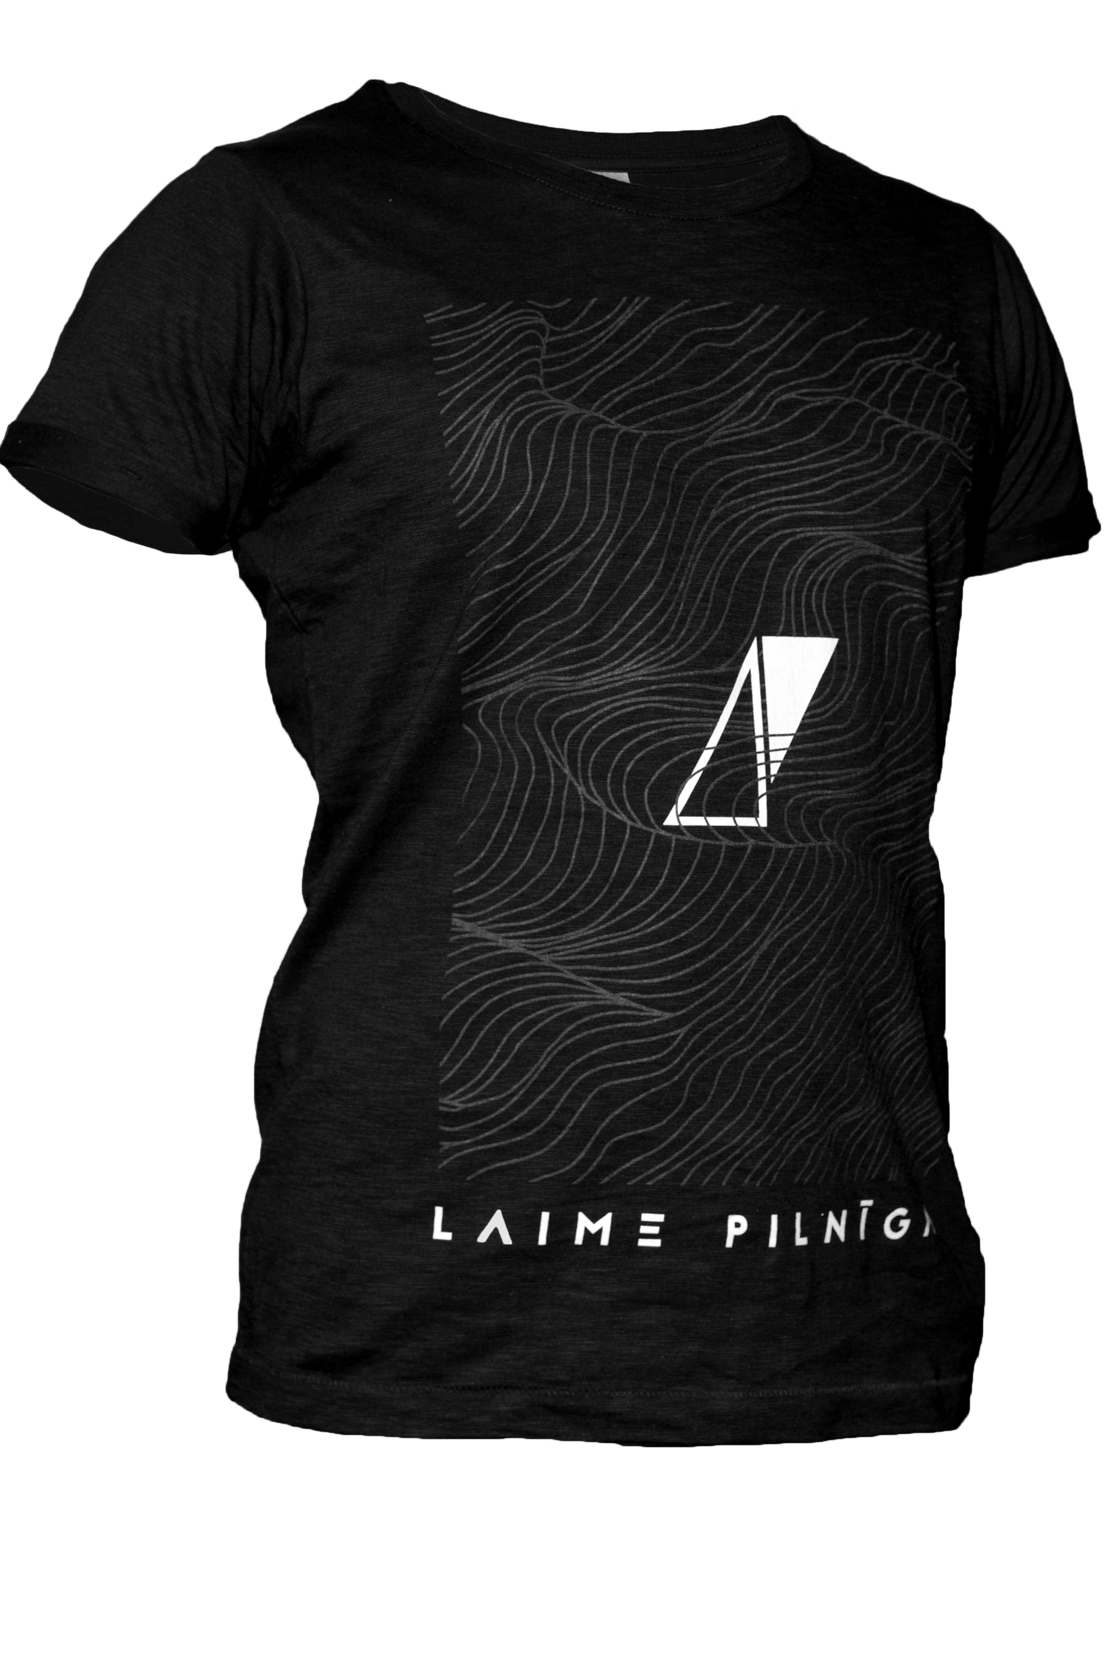 Image of Laime Pilniga "LP" trendy unisex T-shirt